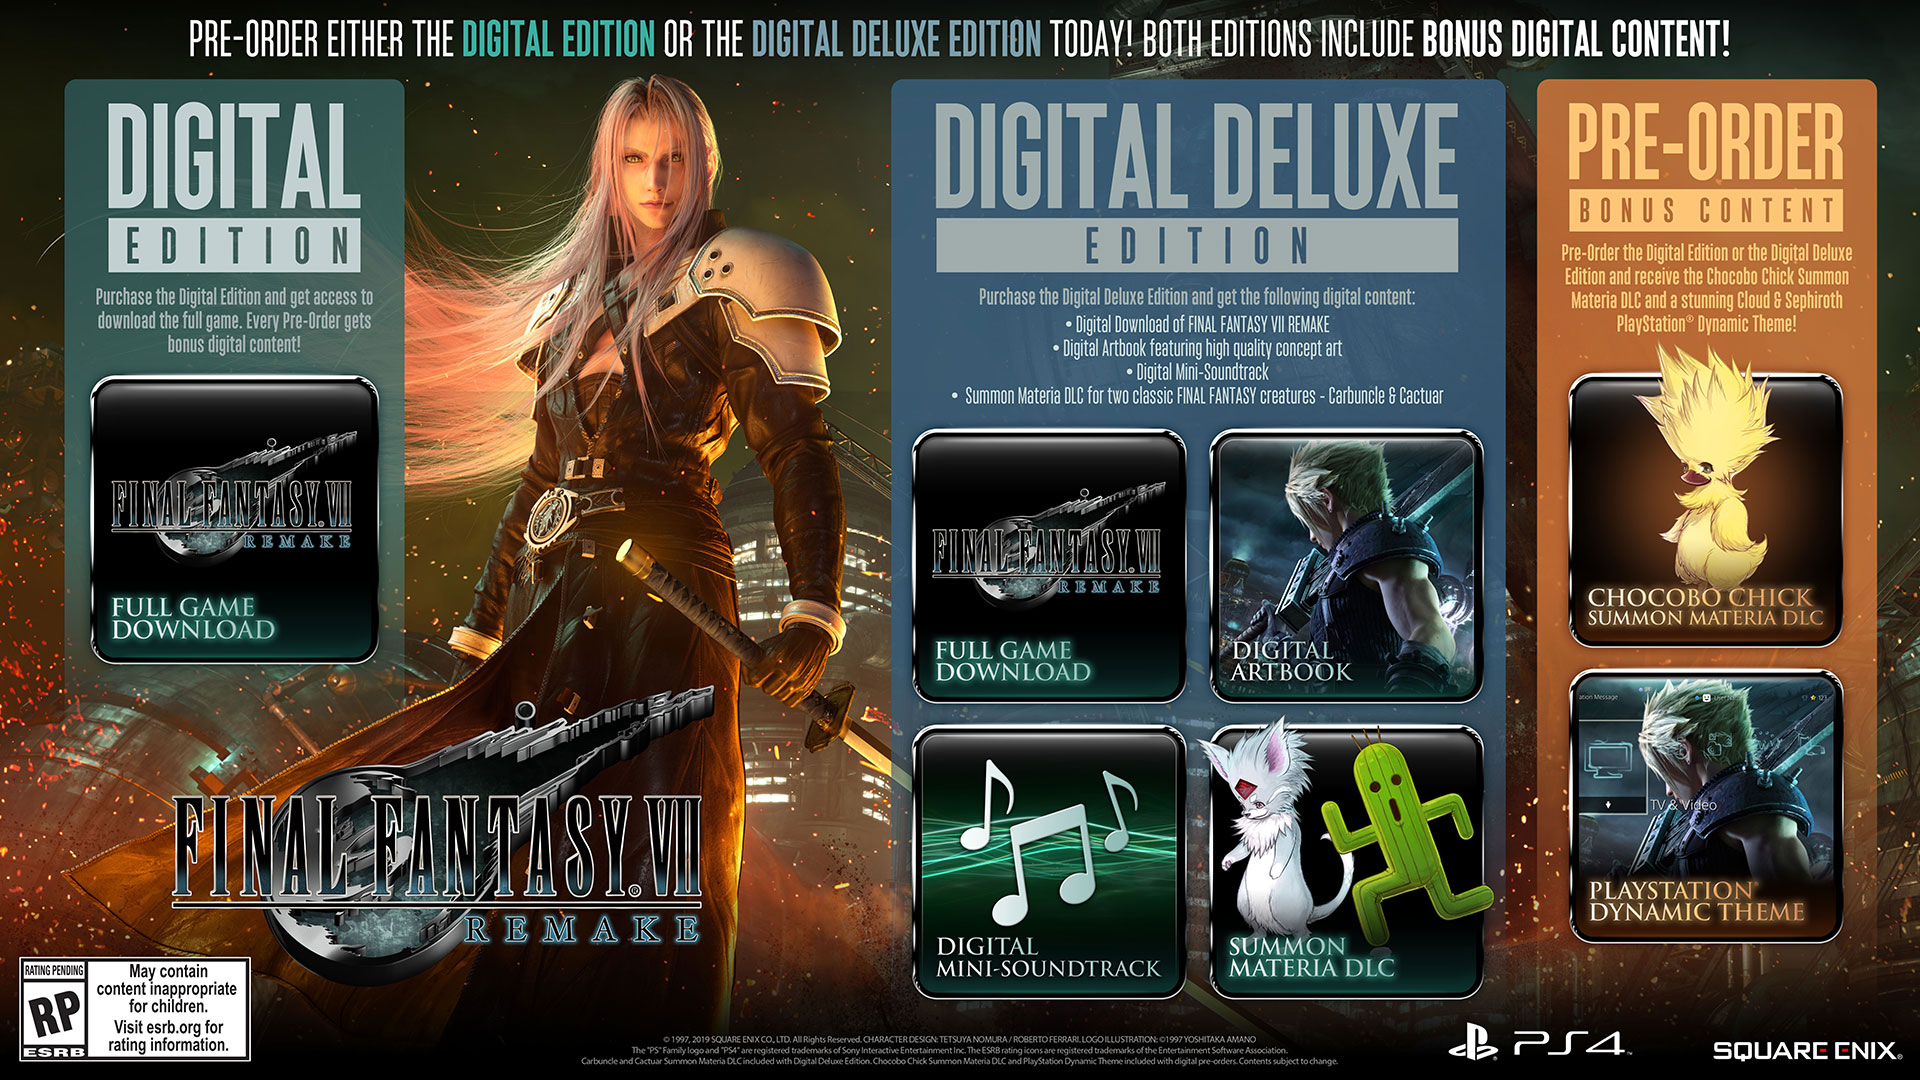 Final Fantasy VII Remake - Digital Edition